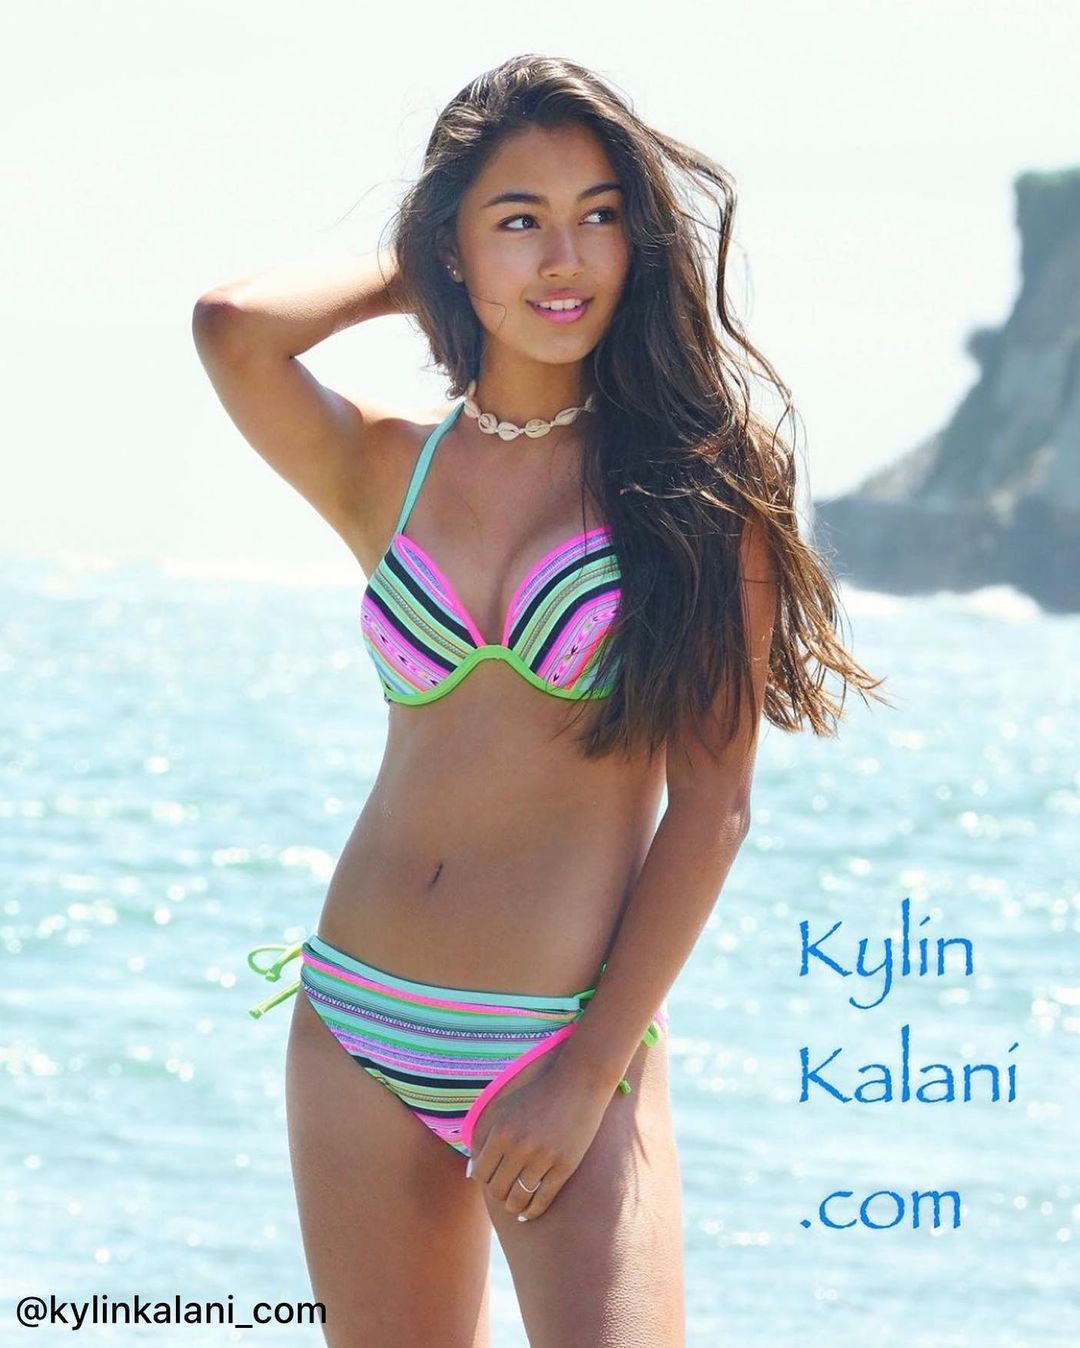 Kylin Kalani, Model.